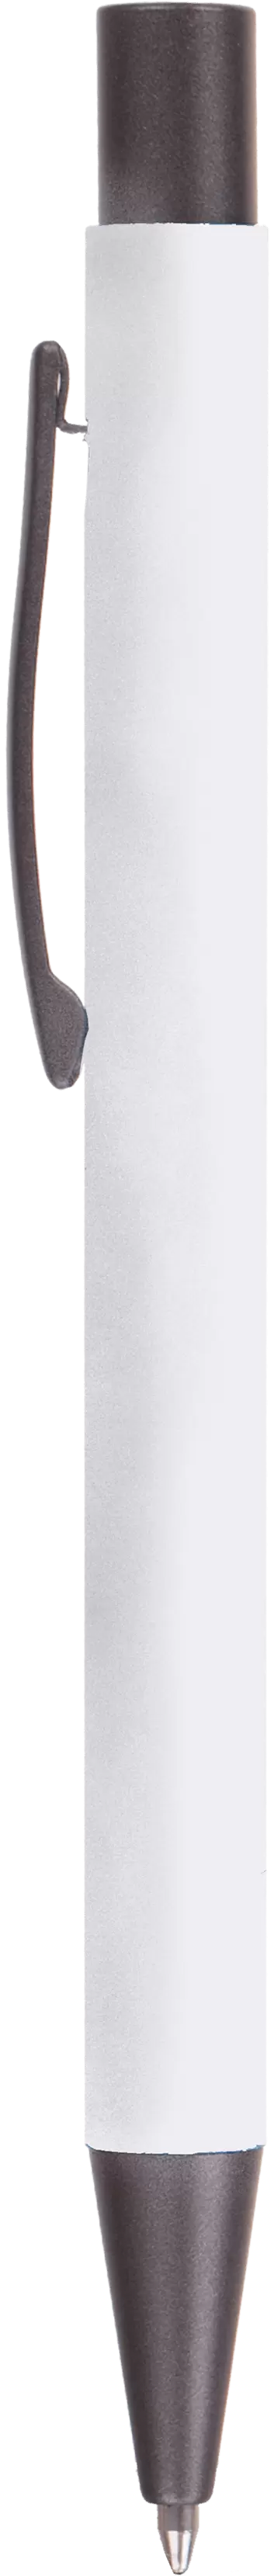 Ручка MAX SOFT TITAN Белая 1110-07